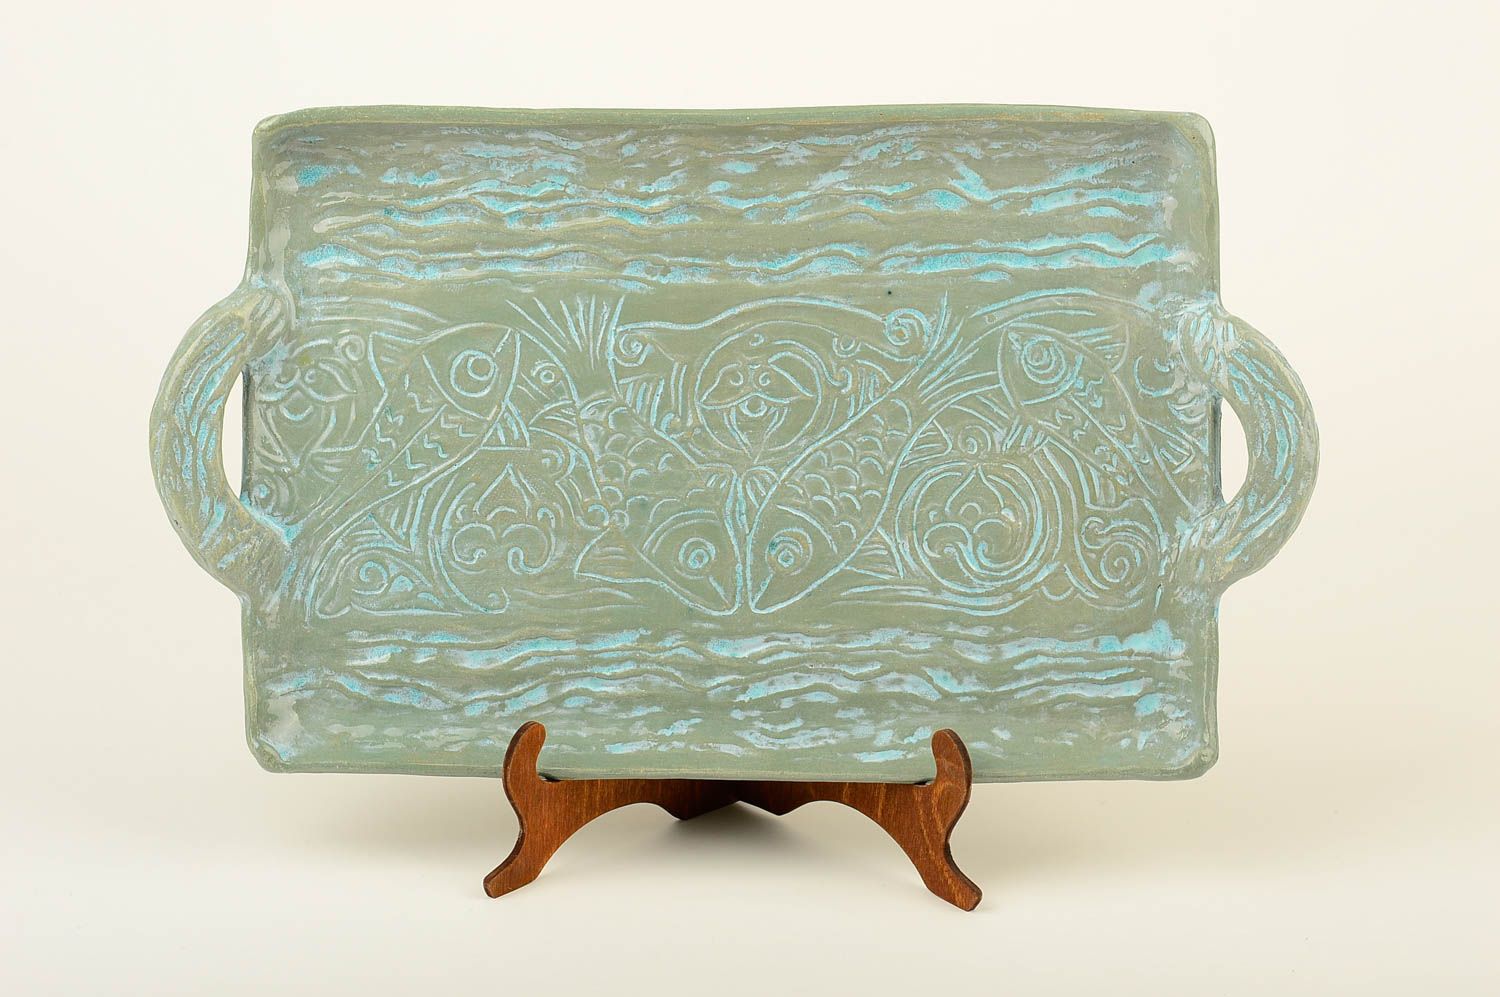 Beautiful handmade ceramic tray pottery works kitchenware ideas small gifts photo 1